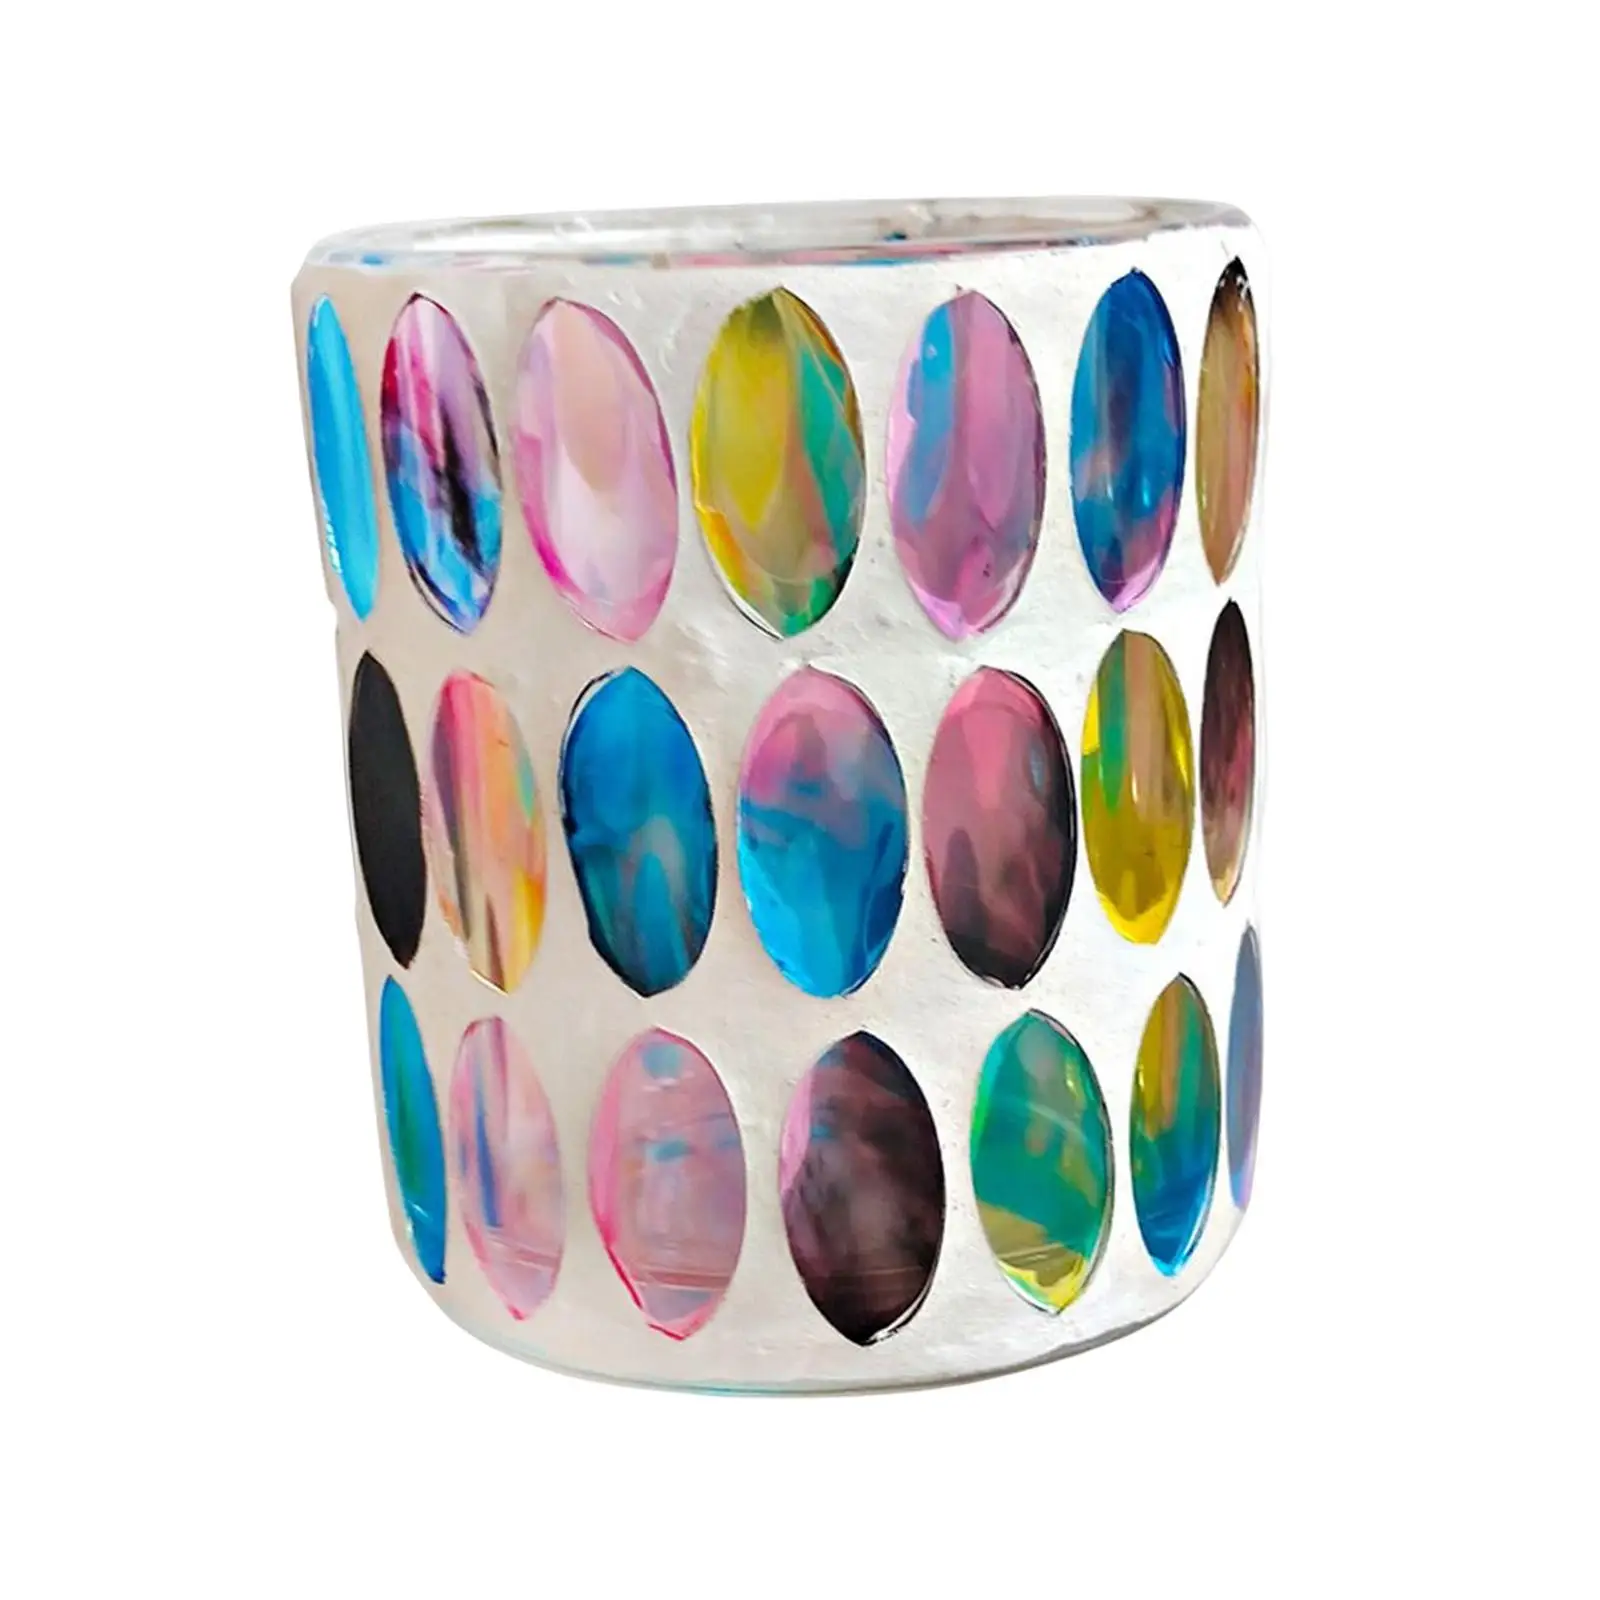 Tealight Holder Artwork Mosaic Glass Candle Jars, for Home Festivals Decor